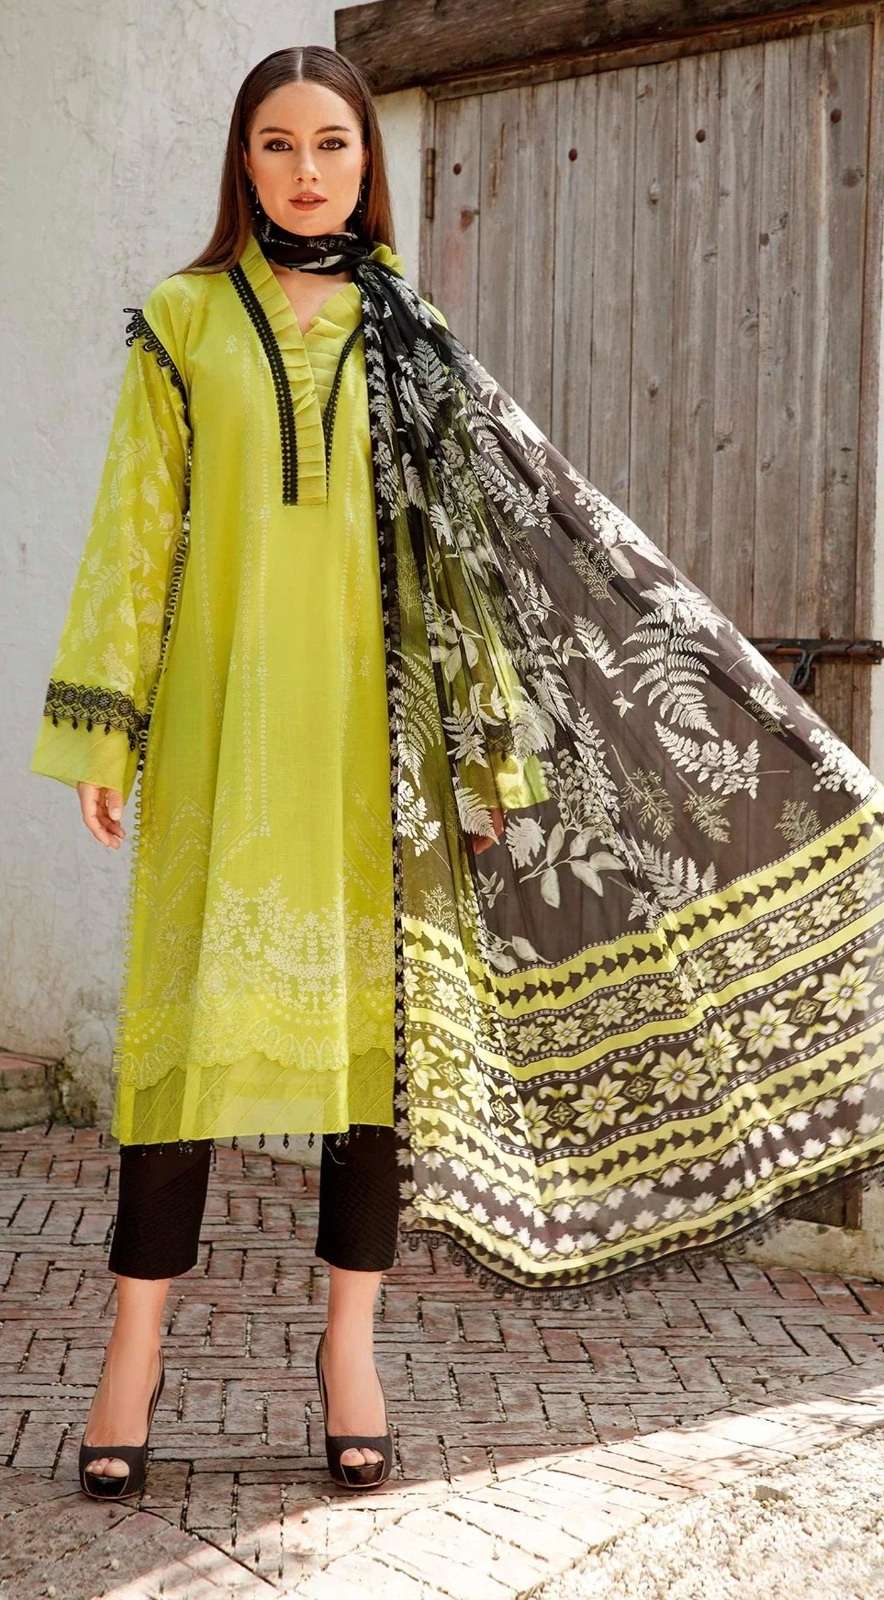 Aasha M Print Vol 6 Chiffon Dupatta Pakistani Suits Wholesale catalog